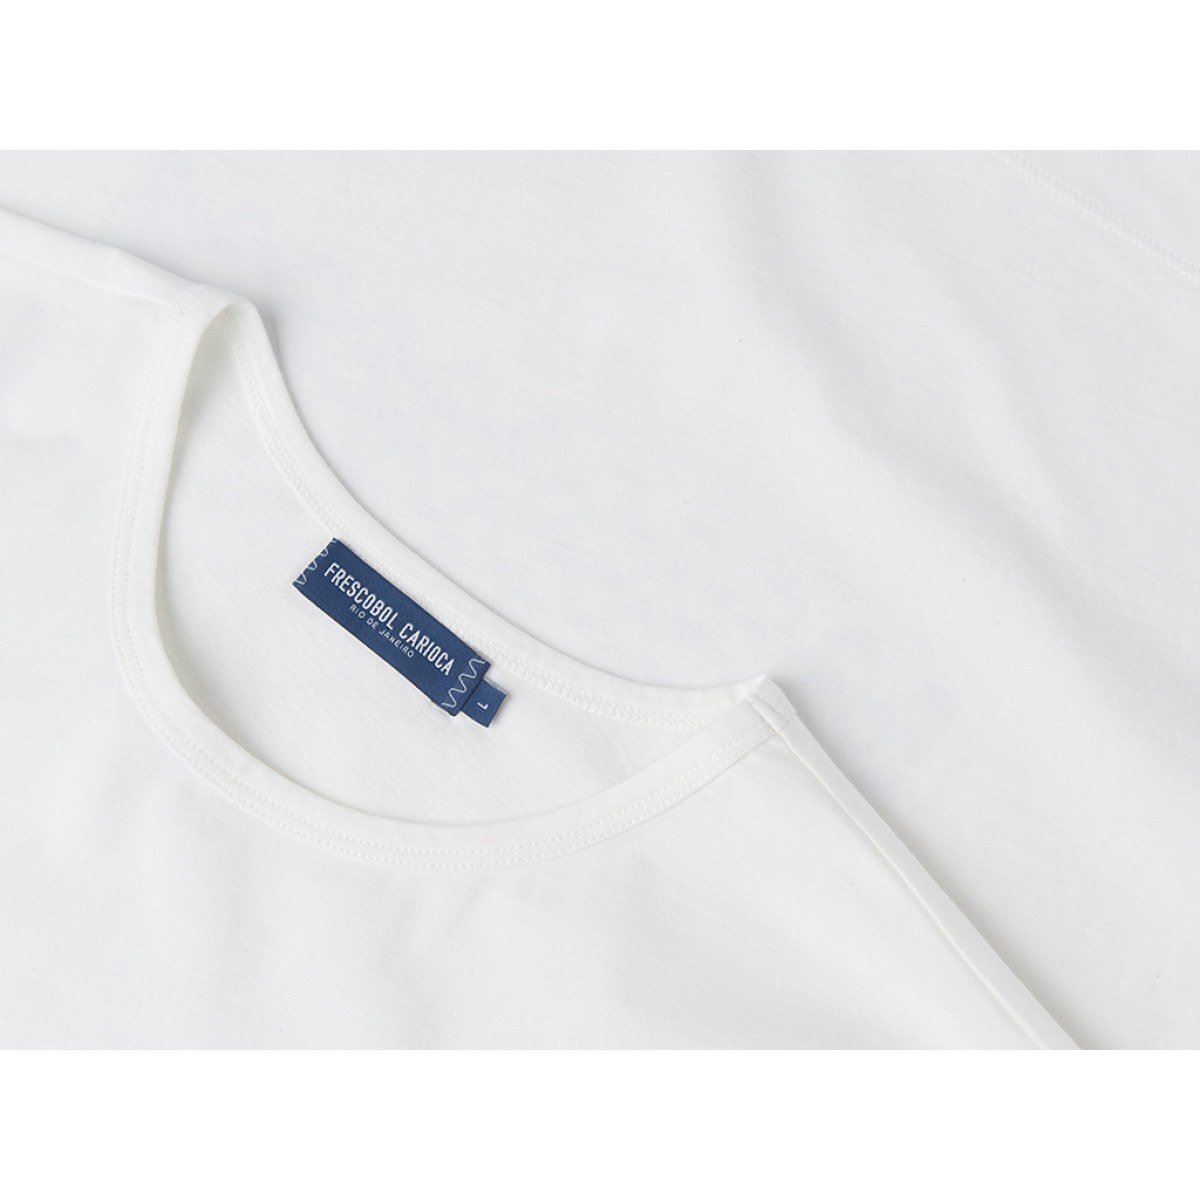 T Shirt フレスコボールとネイマー ジュニアの柄が入った白いtシャツ T Shirt Bat Neymar